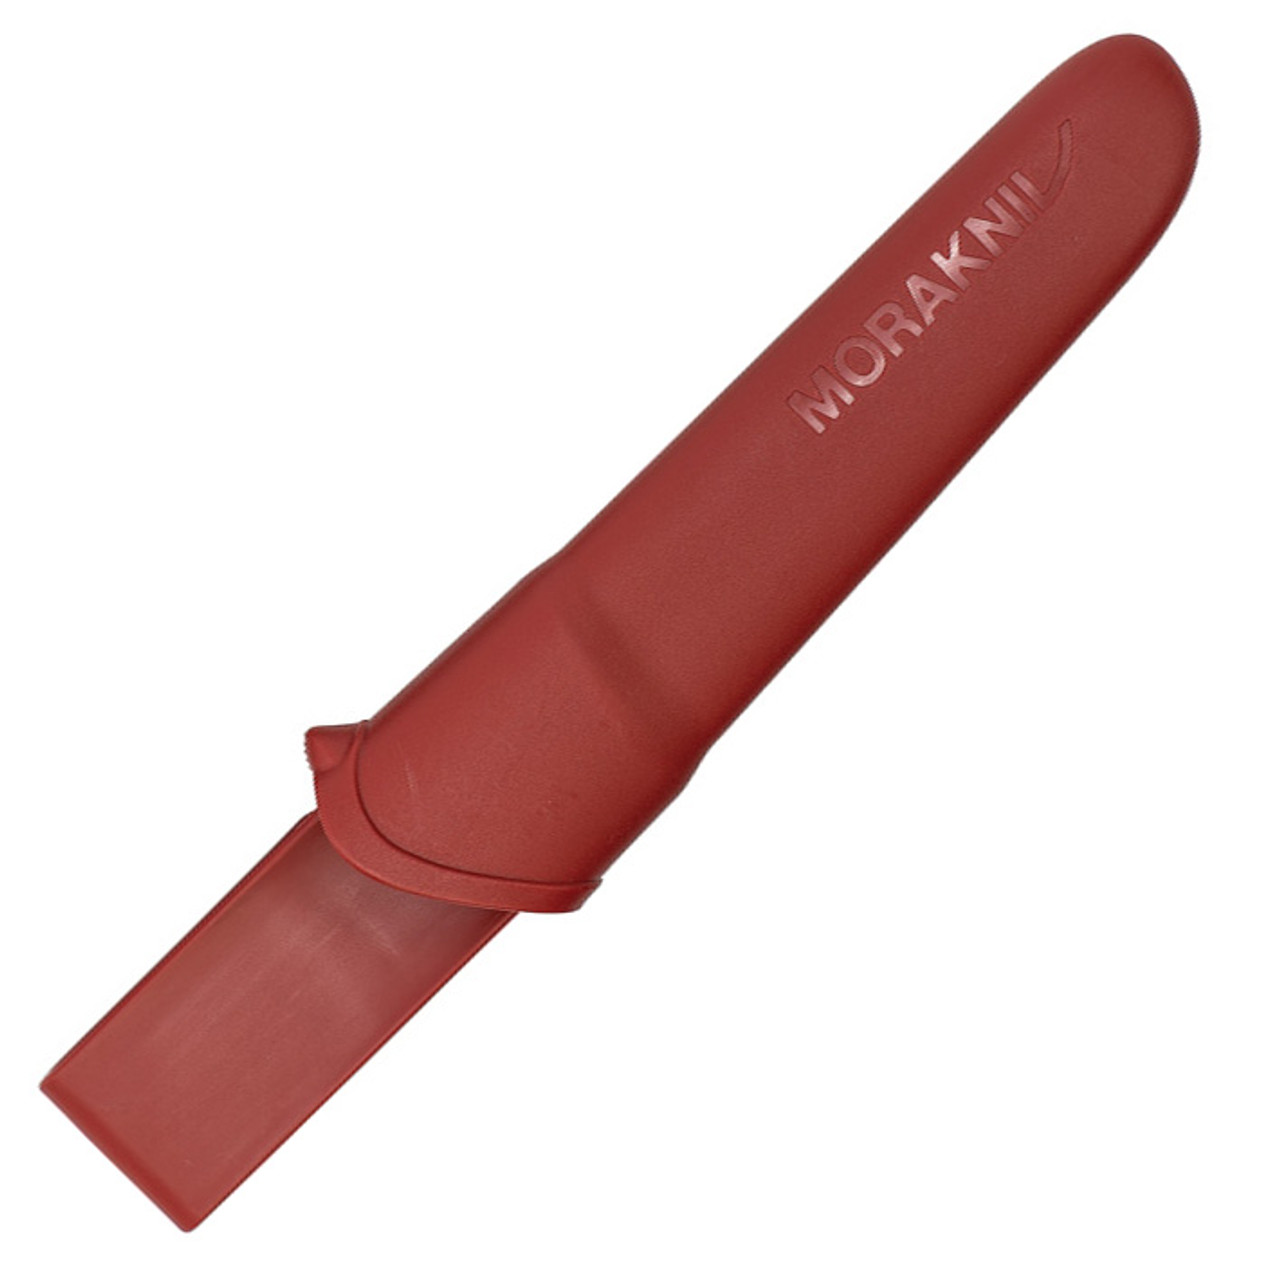 Morakniv Companion Spark 13571, 4.1" Stainless Steel Blade, Red& Black Polypropylene Handle, ft02396